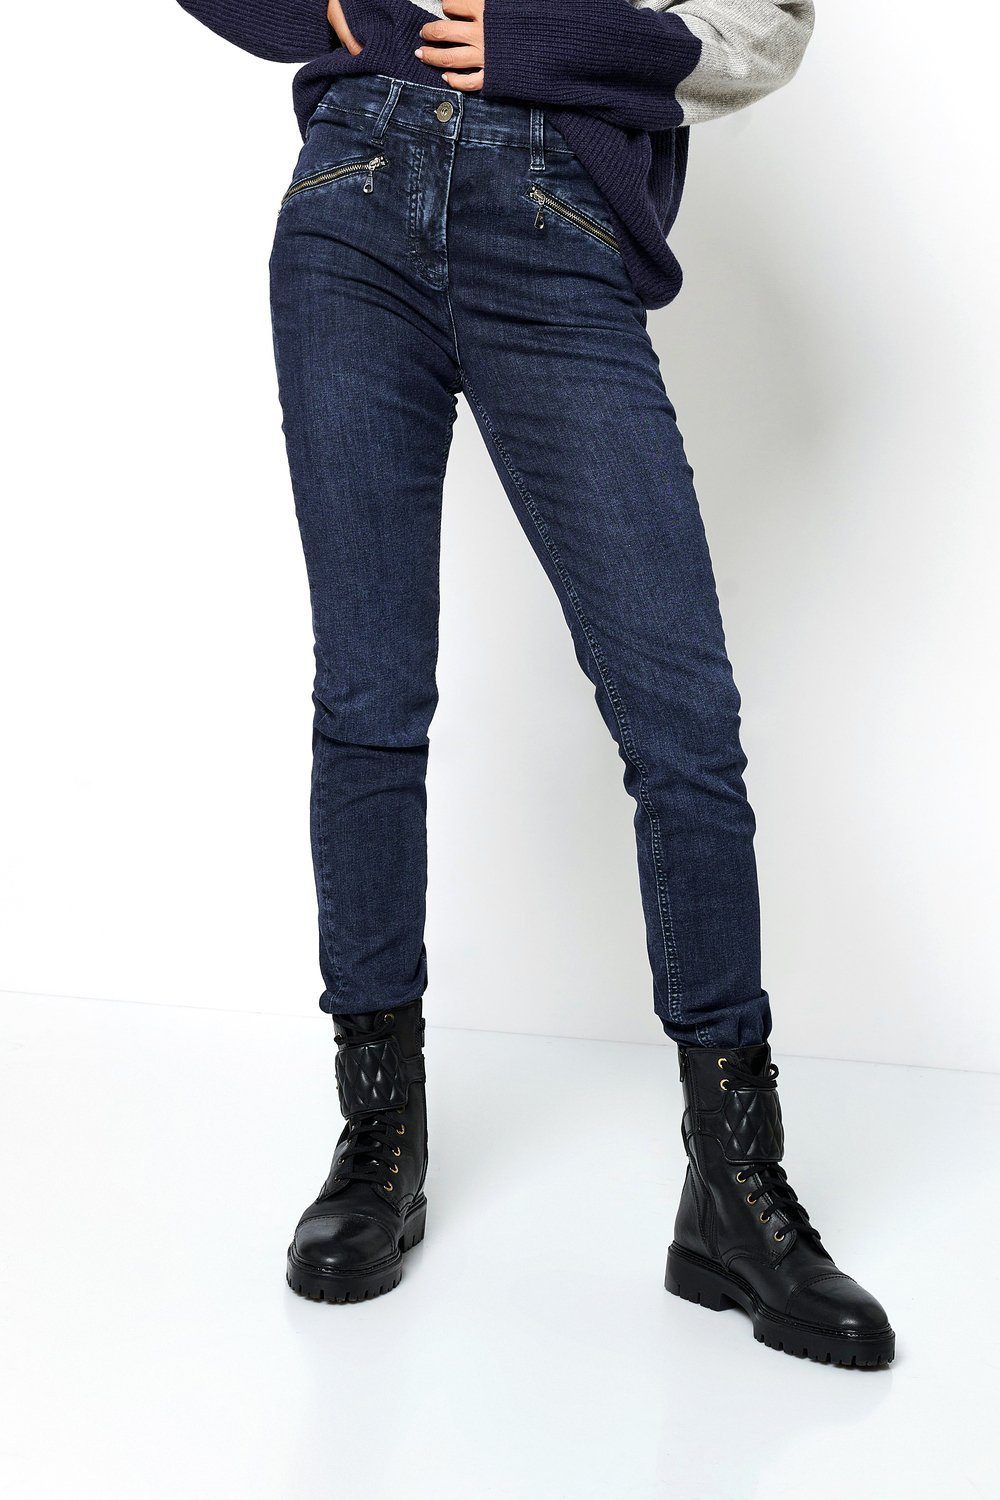 be loved TONI Zip Slim-fit-Jeans